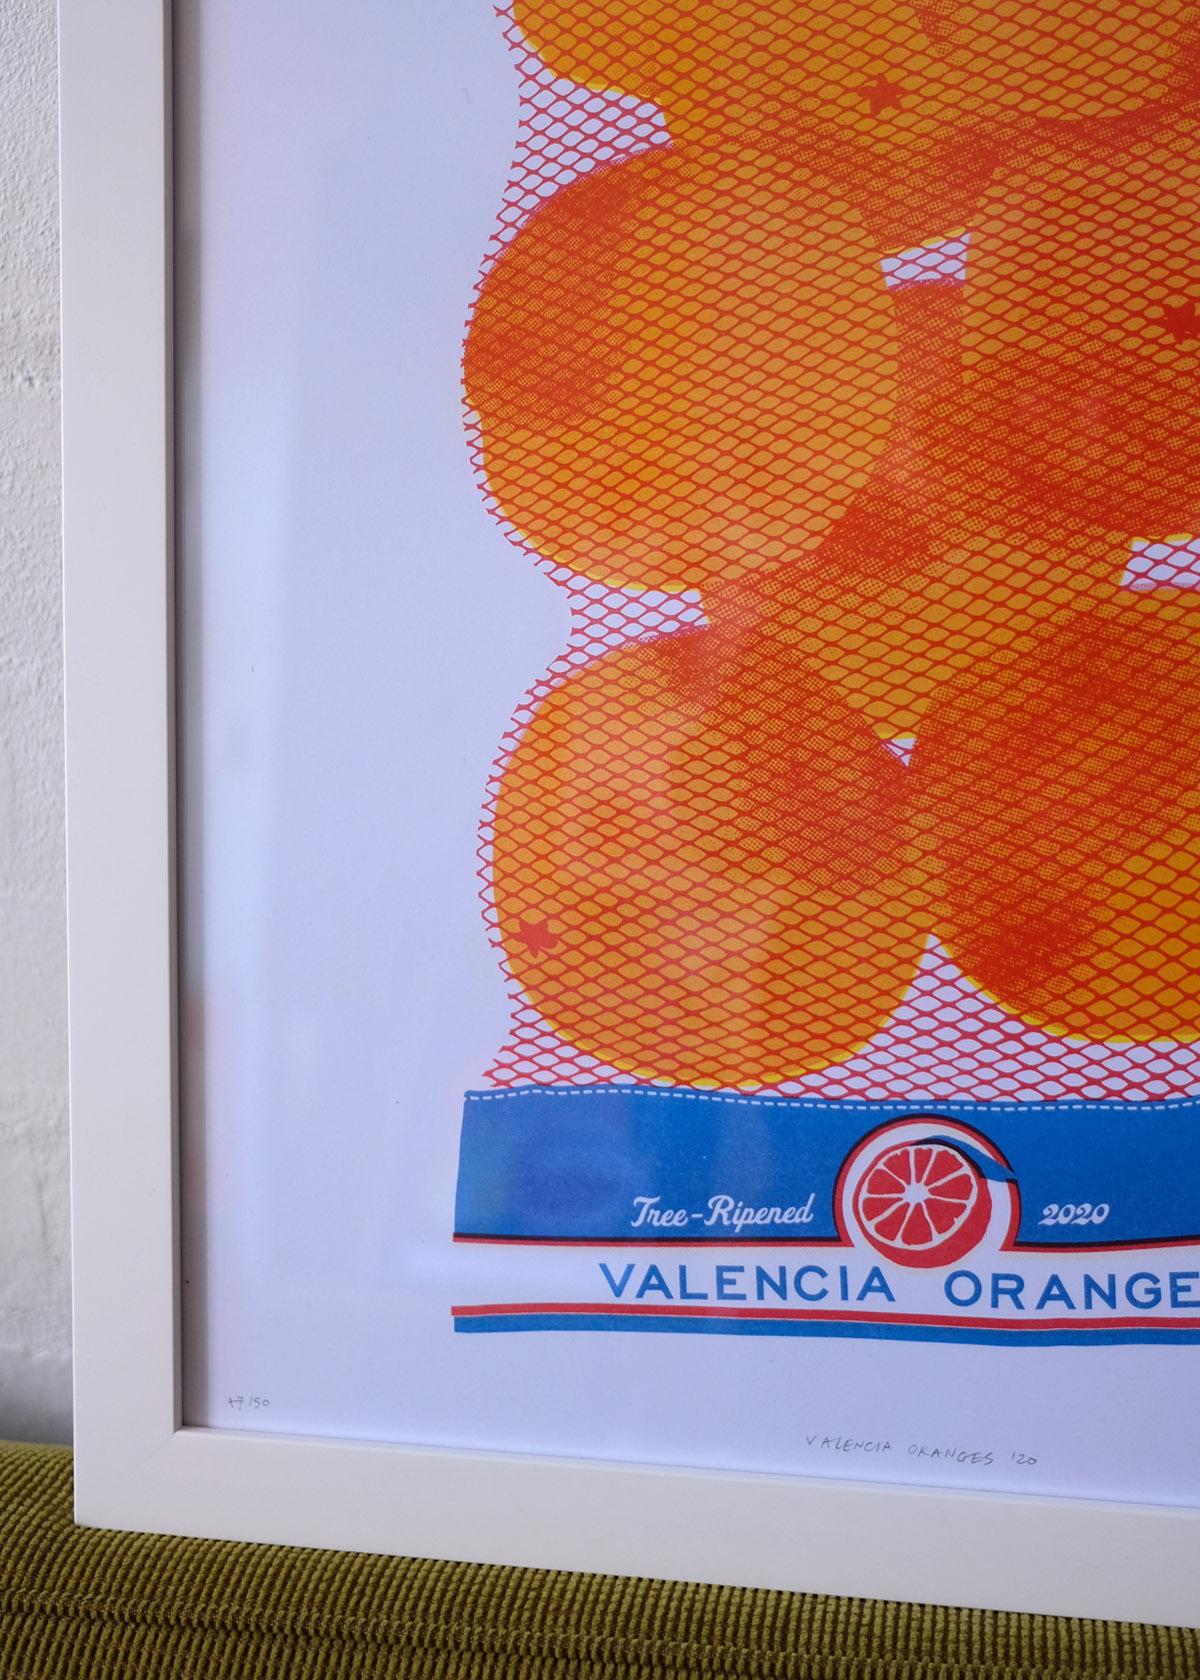 Bag of Valencia Oranges Risograph Print 3